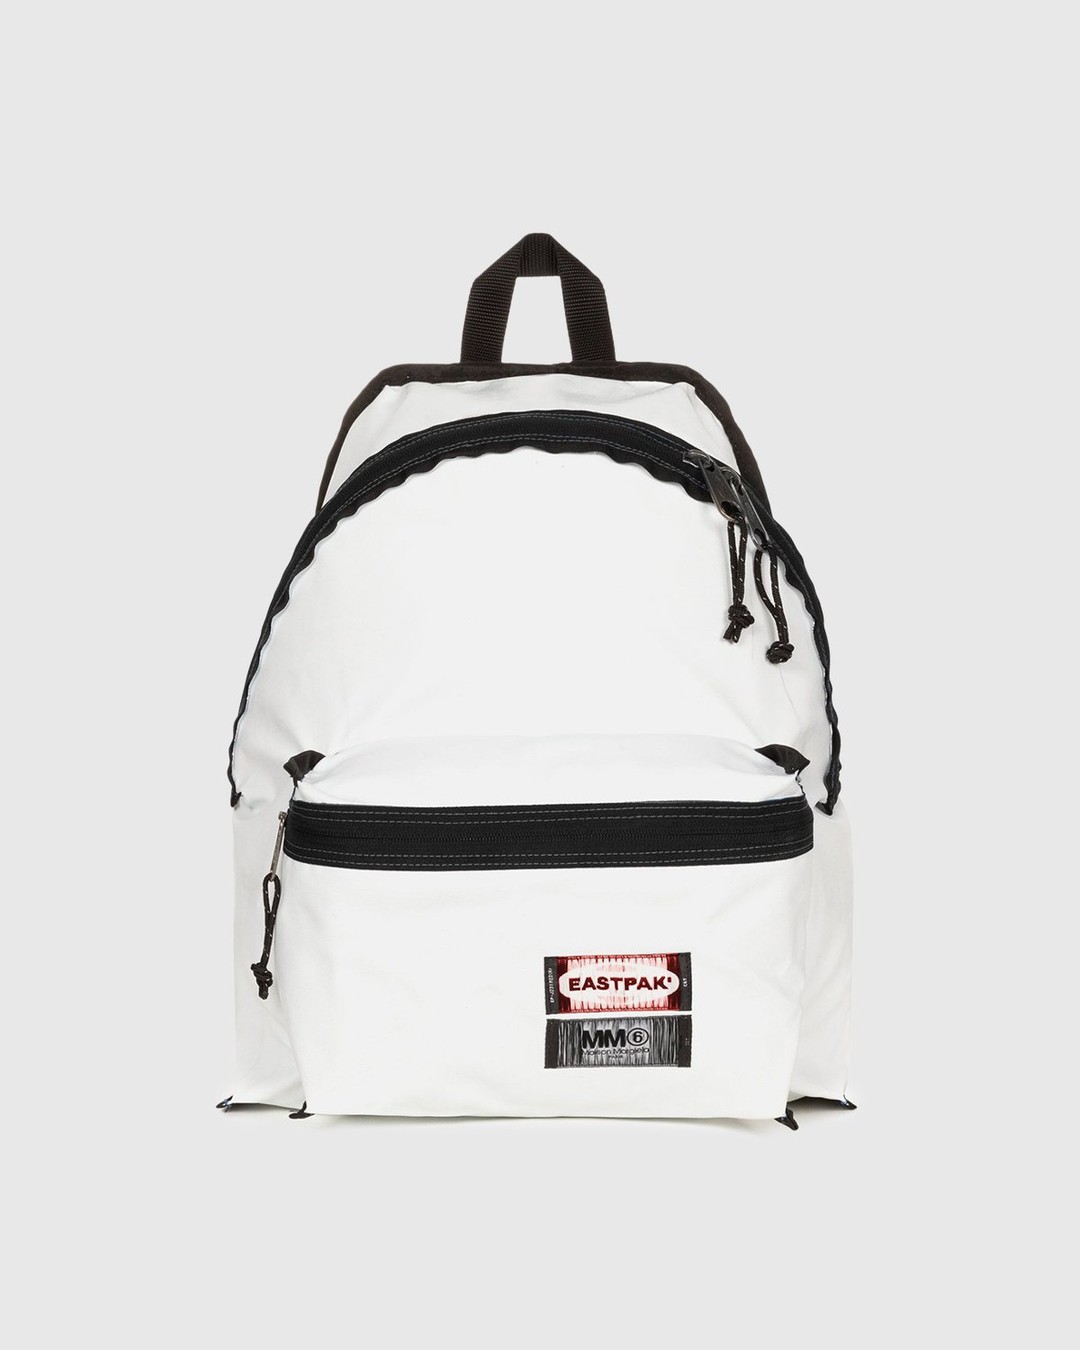 MM6 Maison Margiela x Eastpak – Padded Backpack Black - Bags - Black - Image 4